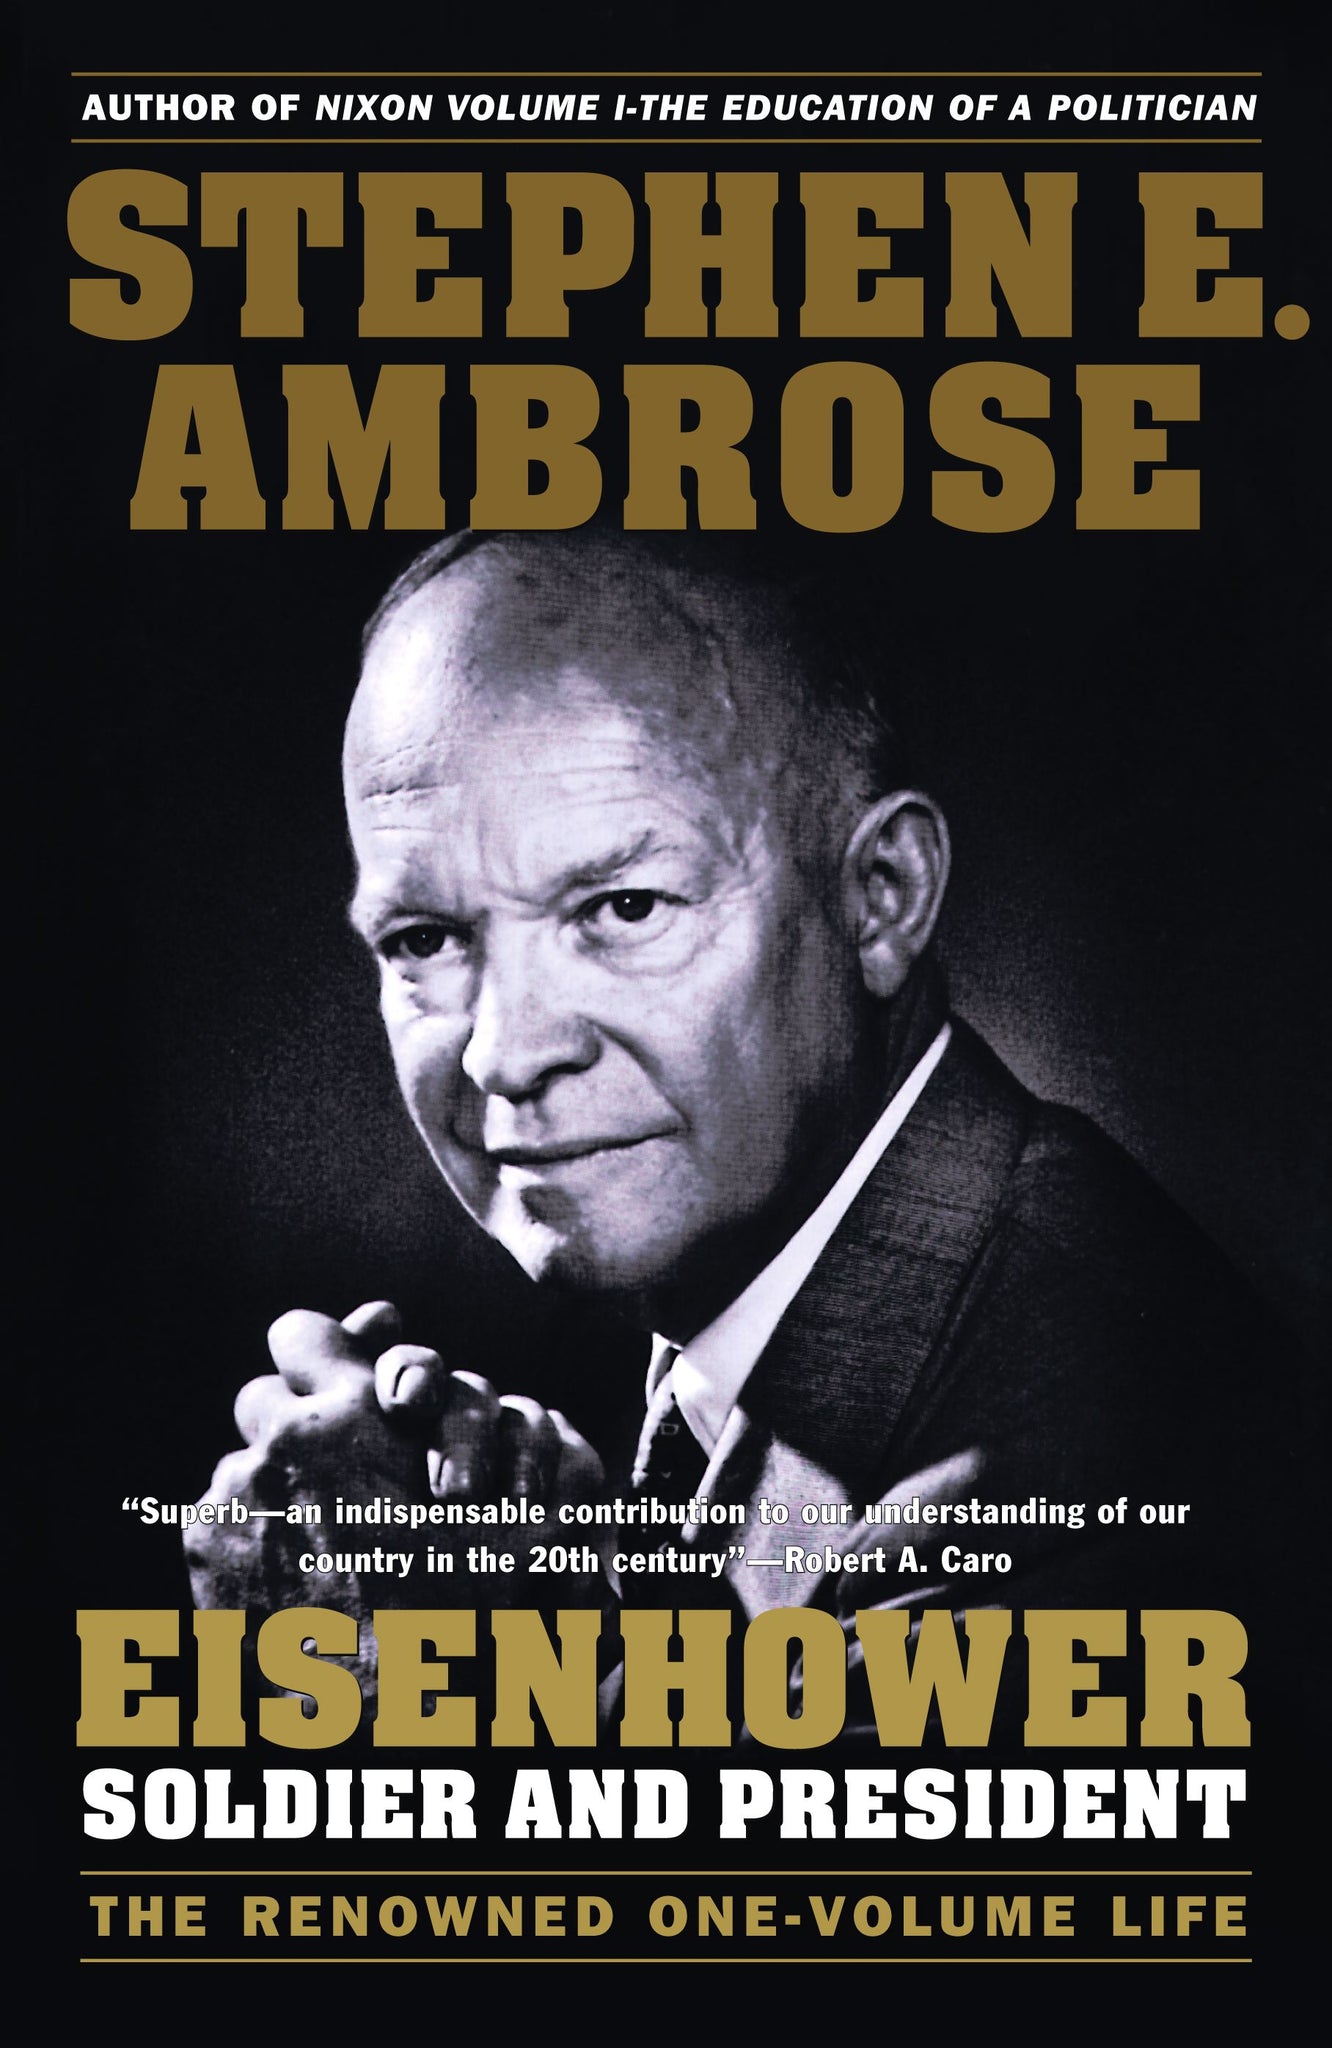 Eisenhower : Soldier and President